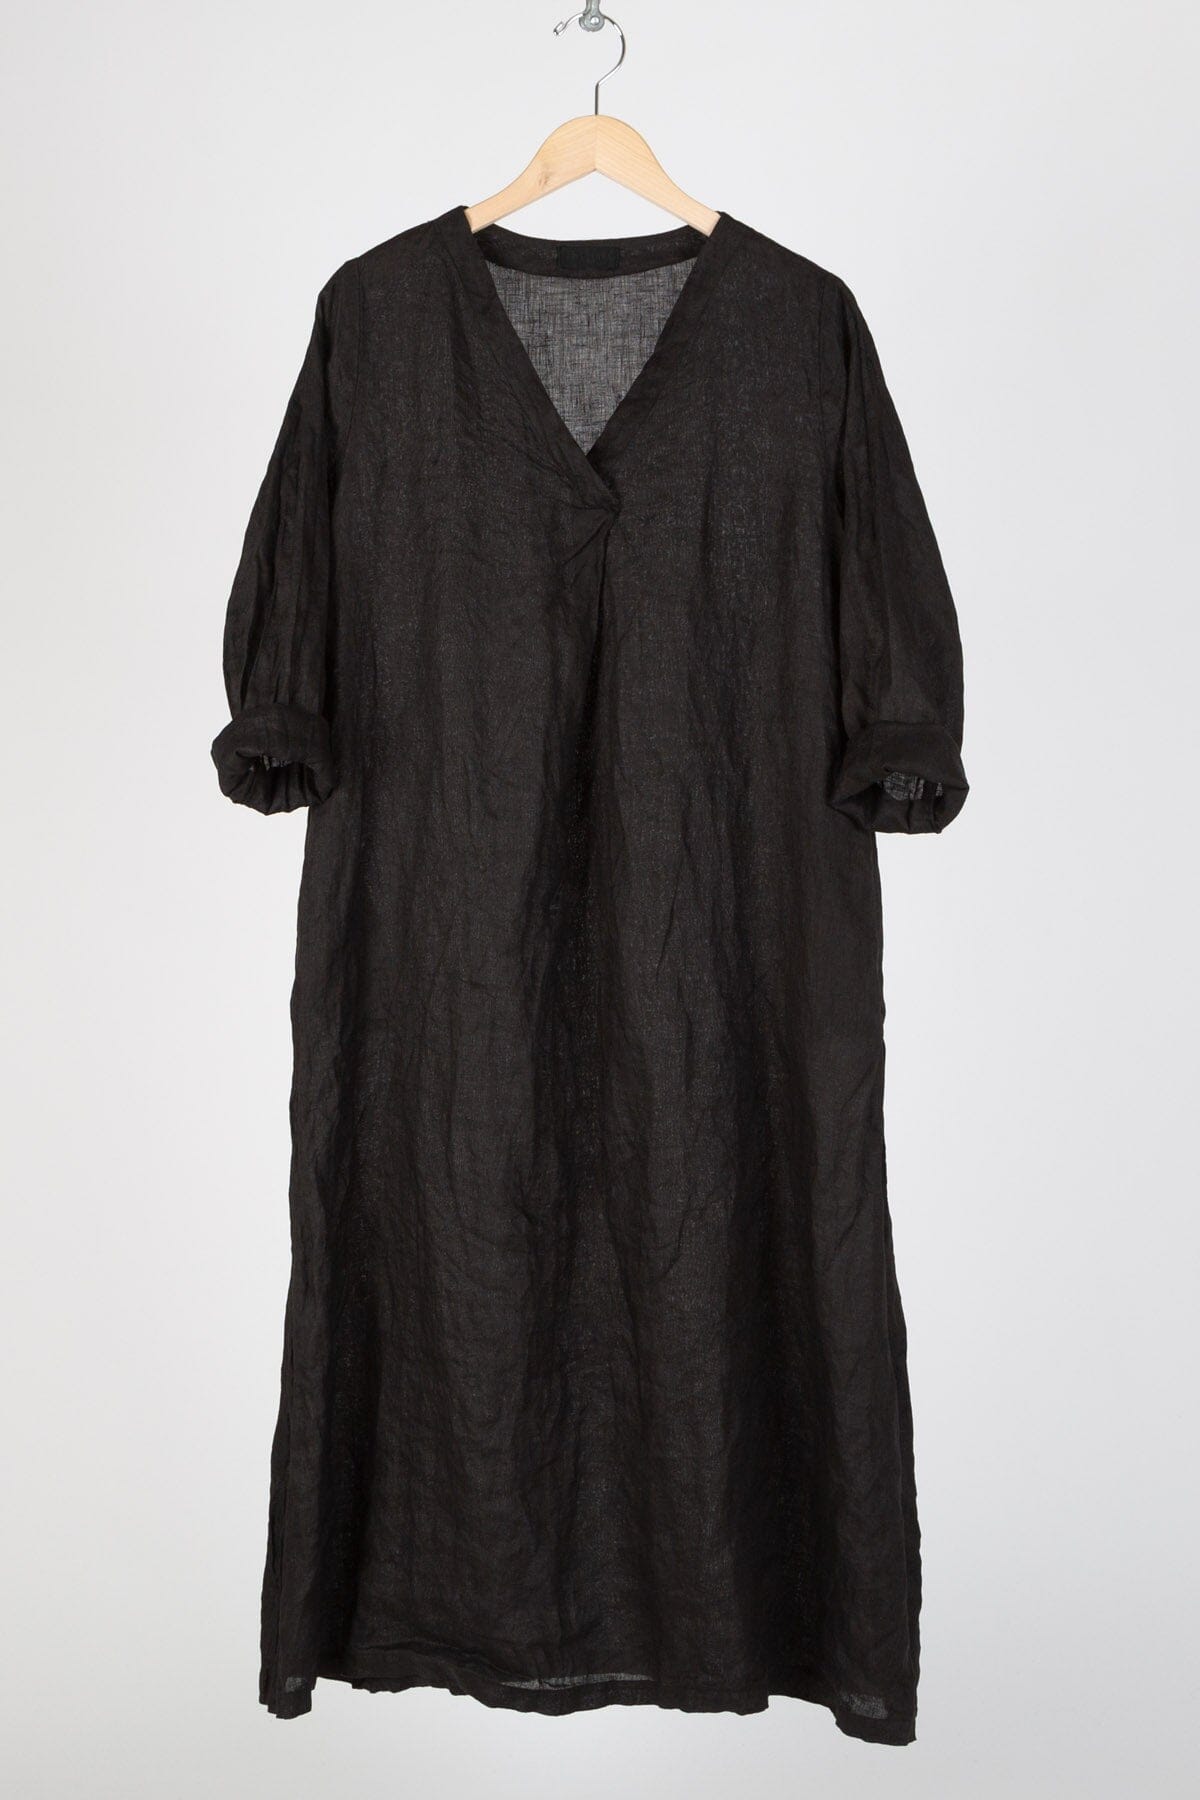 Mallory - Linen S17 - Solid Linen Dresses CP Shades black